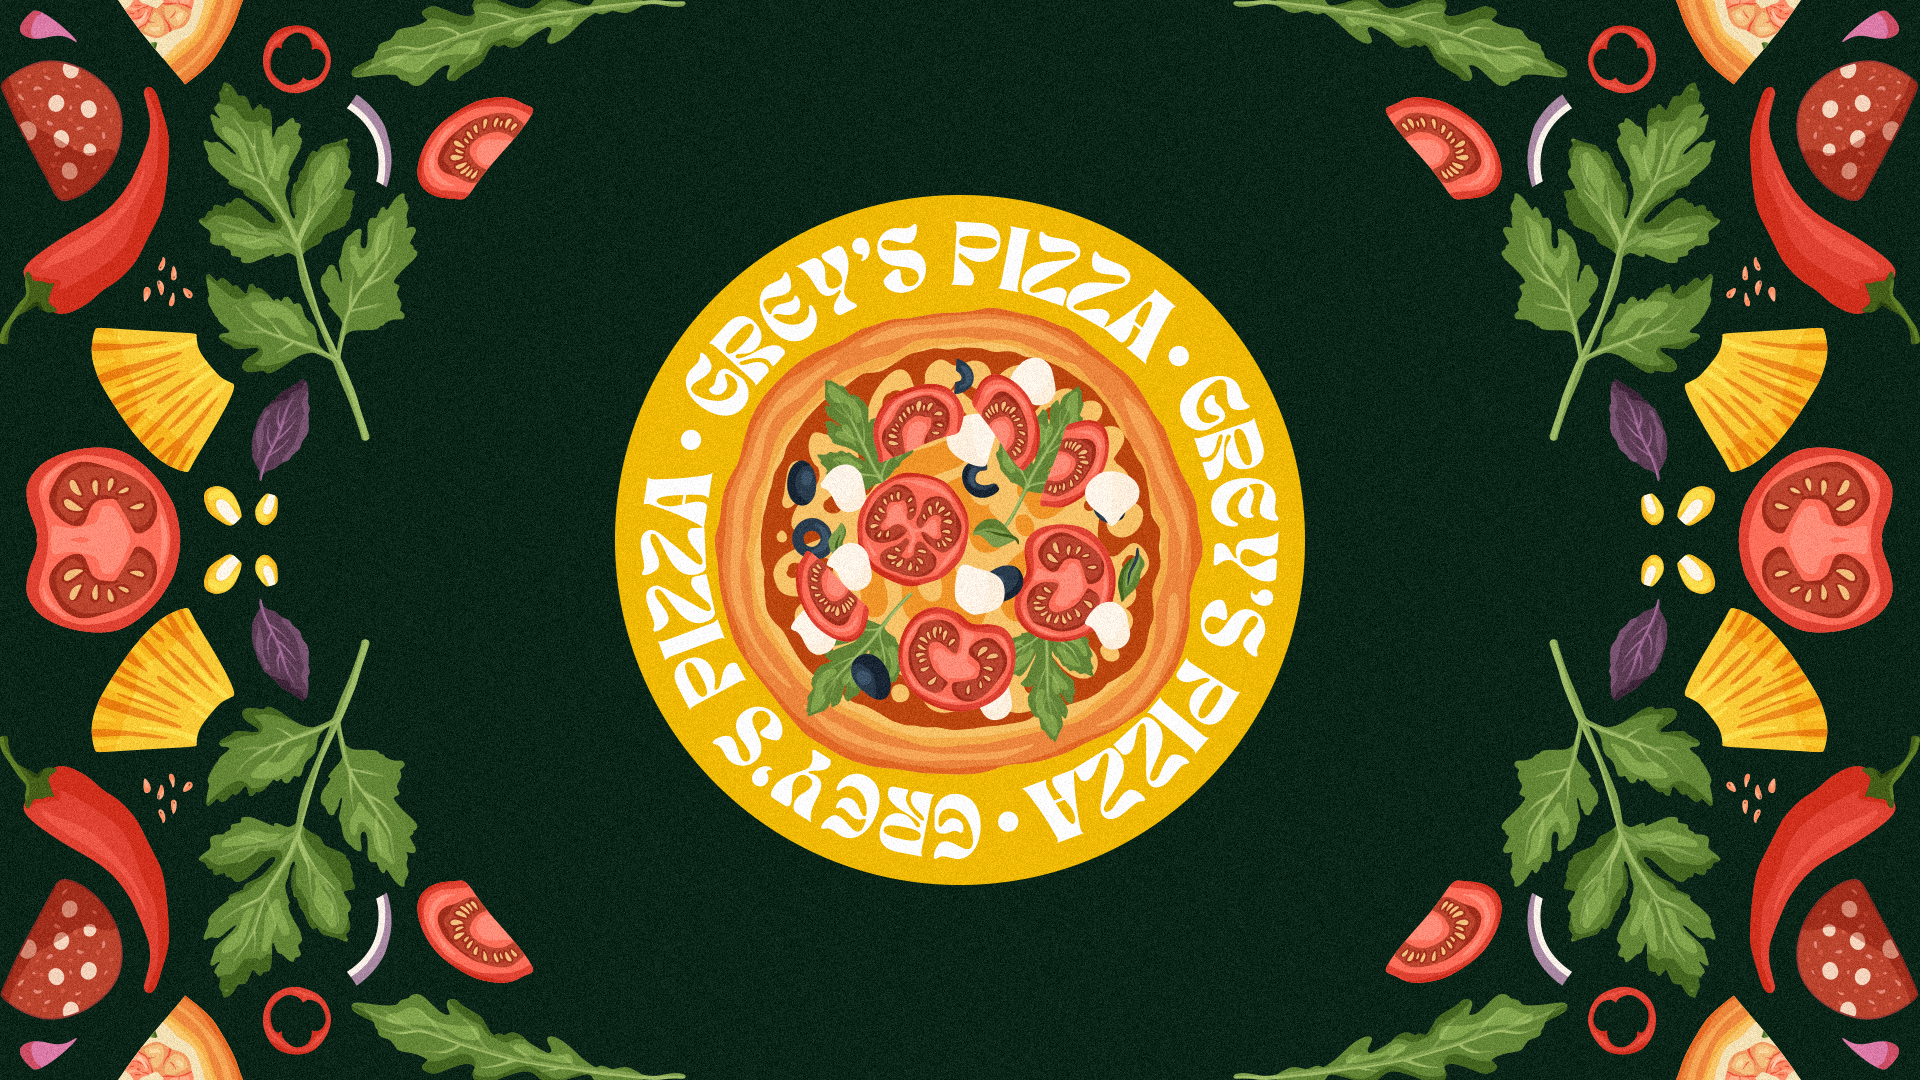 les tetes dampoule greys pizza logo illustration 04